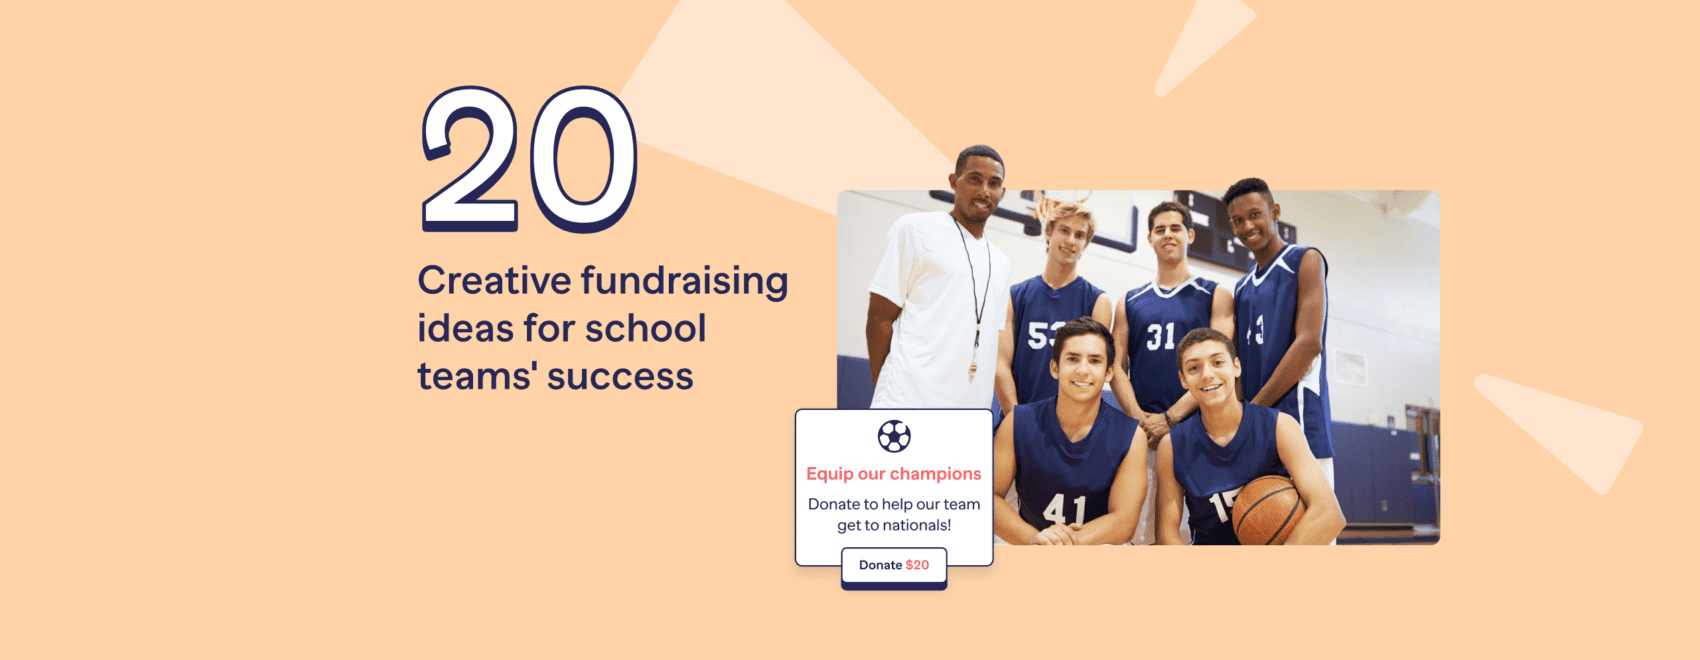 20 Creative fundraising ideas for school teams' success